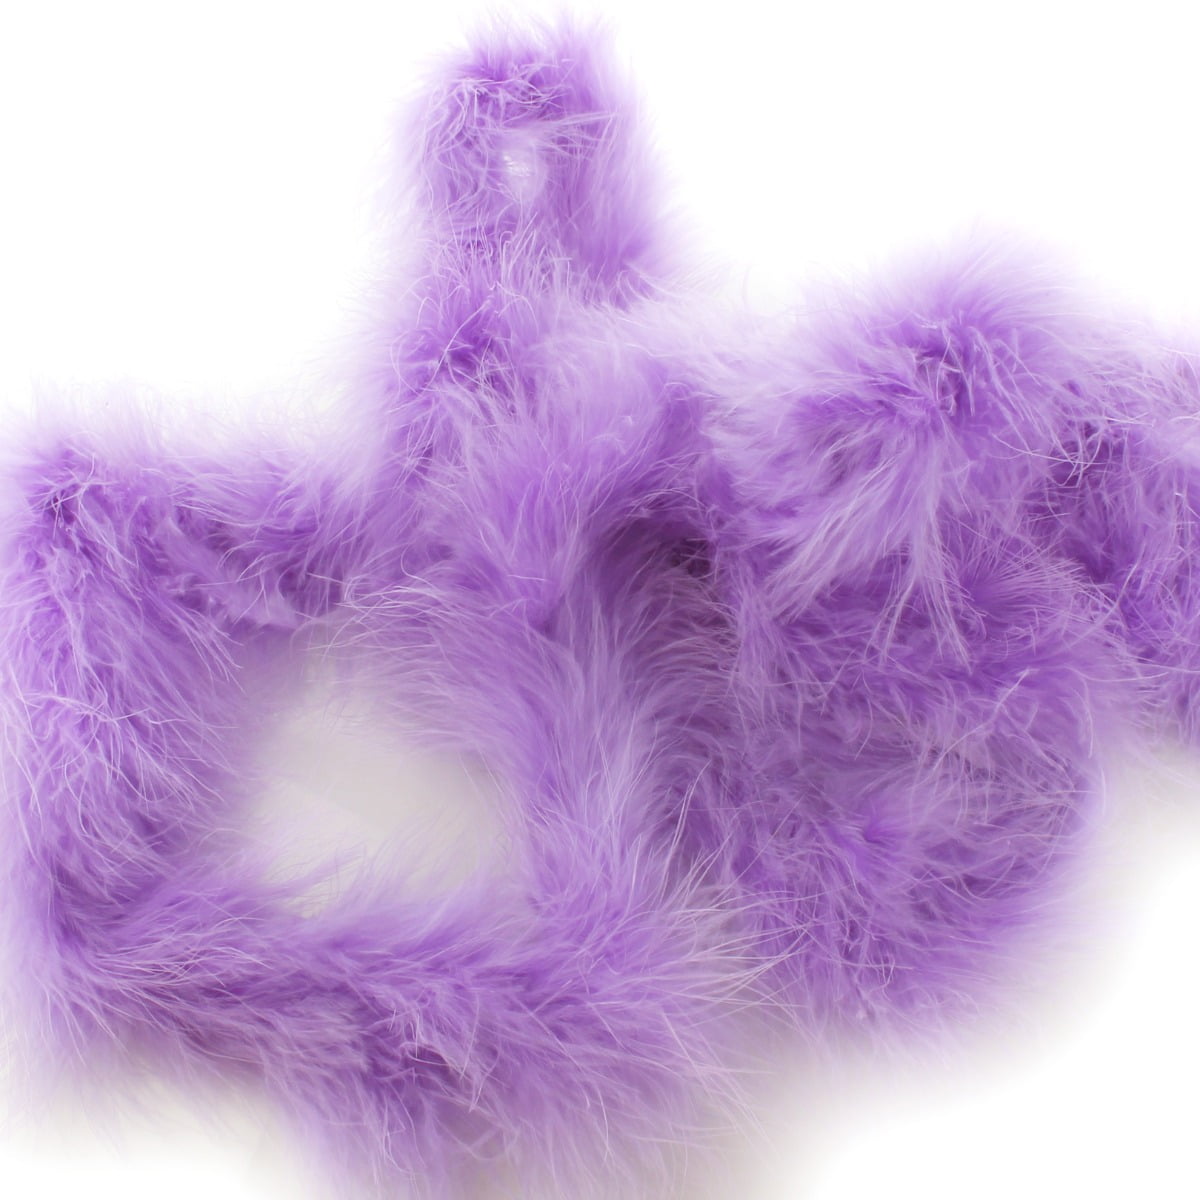 Full Marabou Feather Boa - 2 Yards - Lavender 